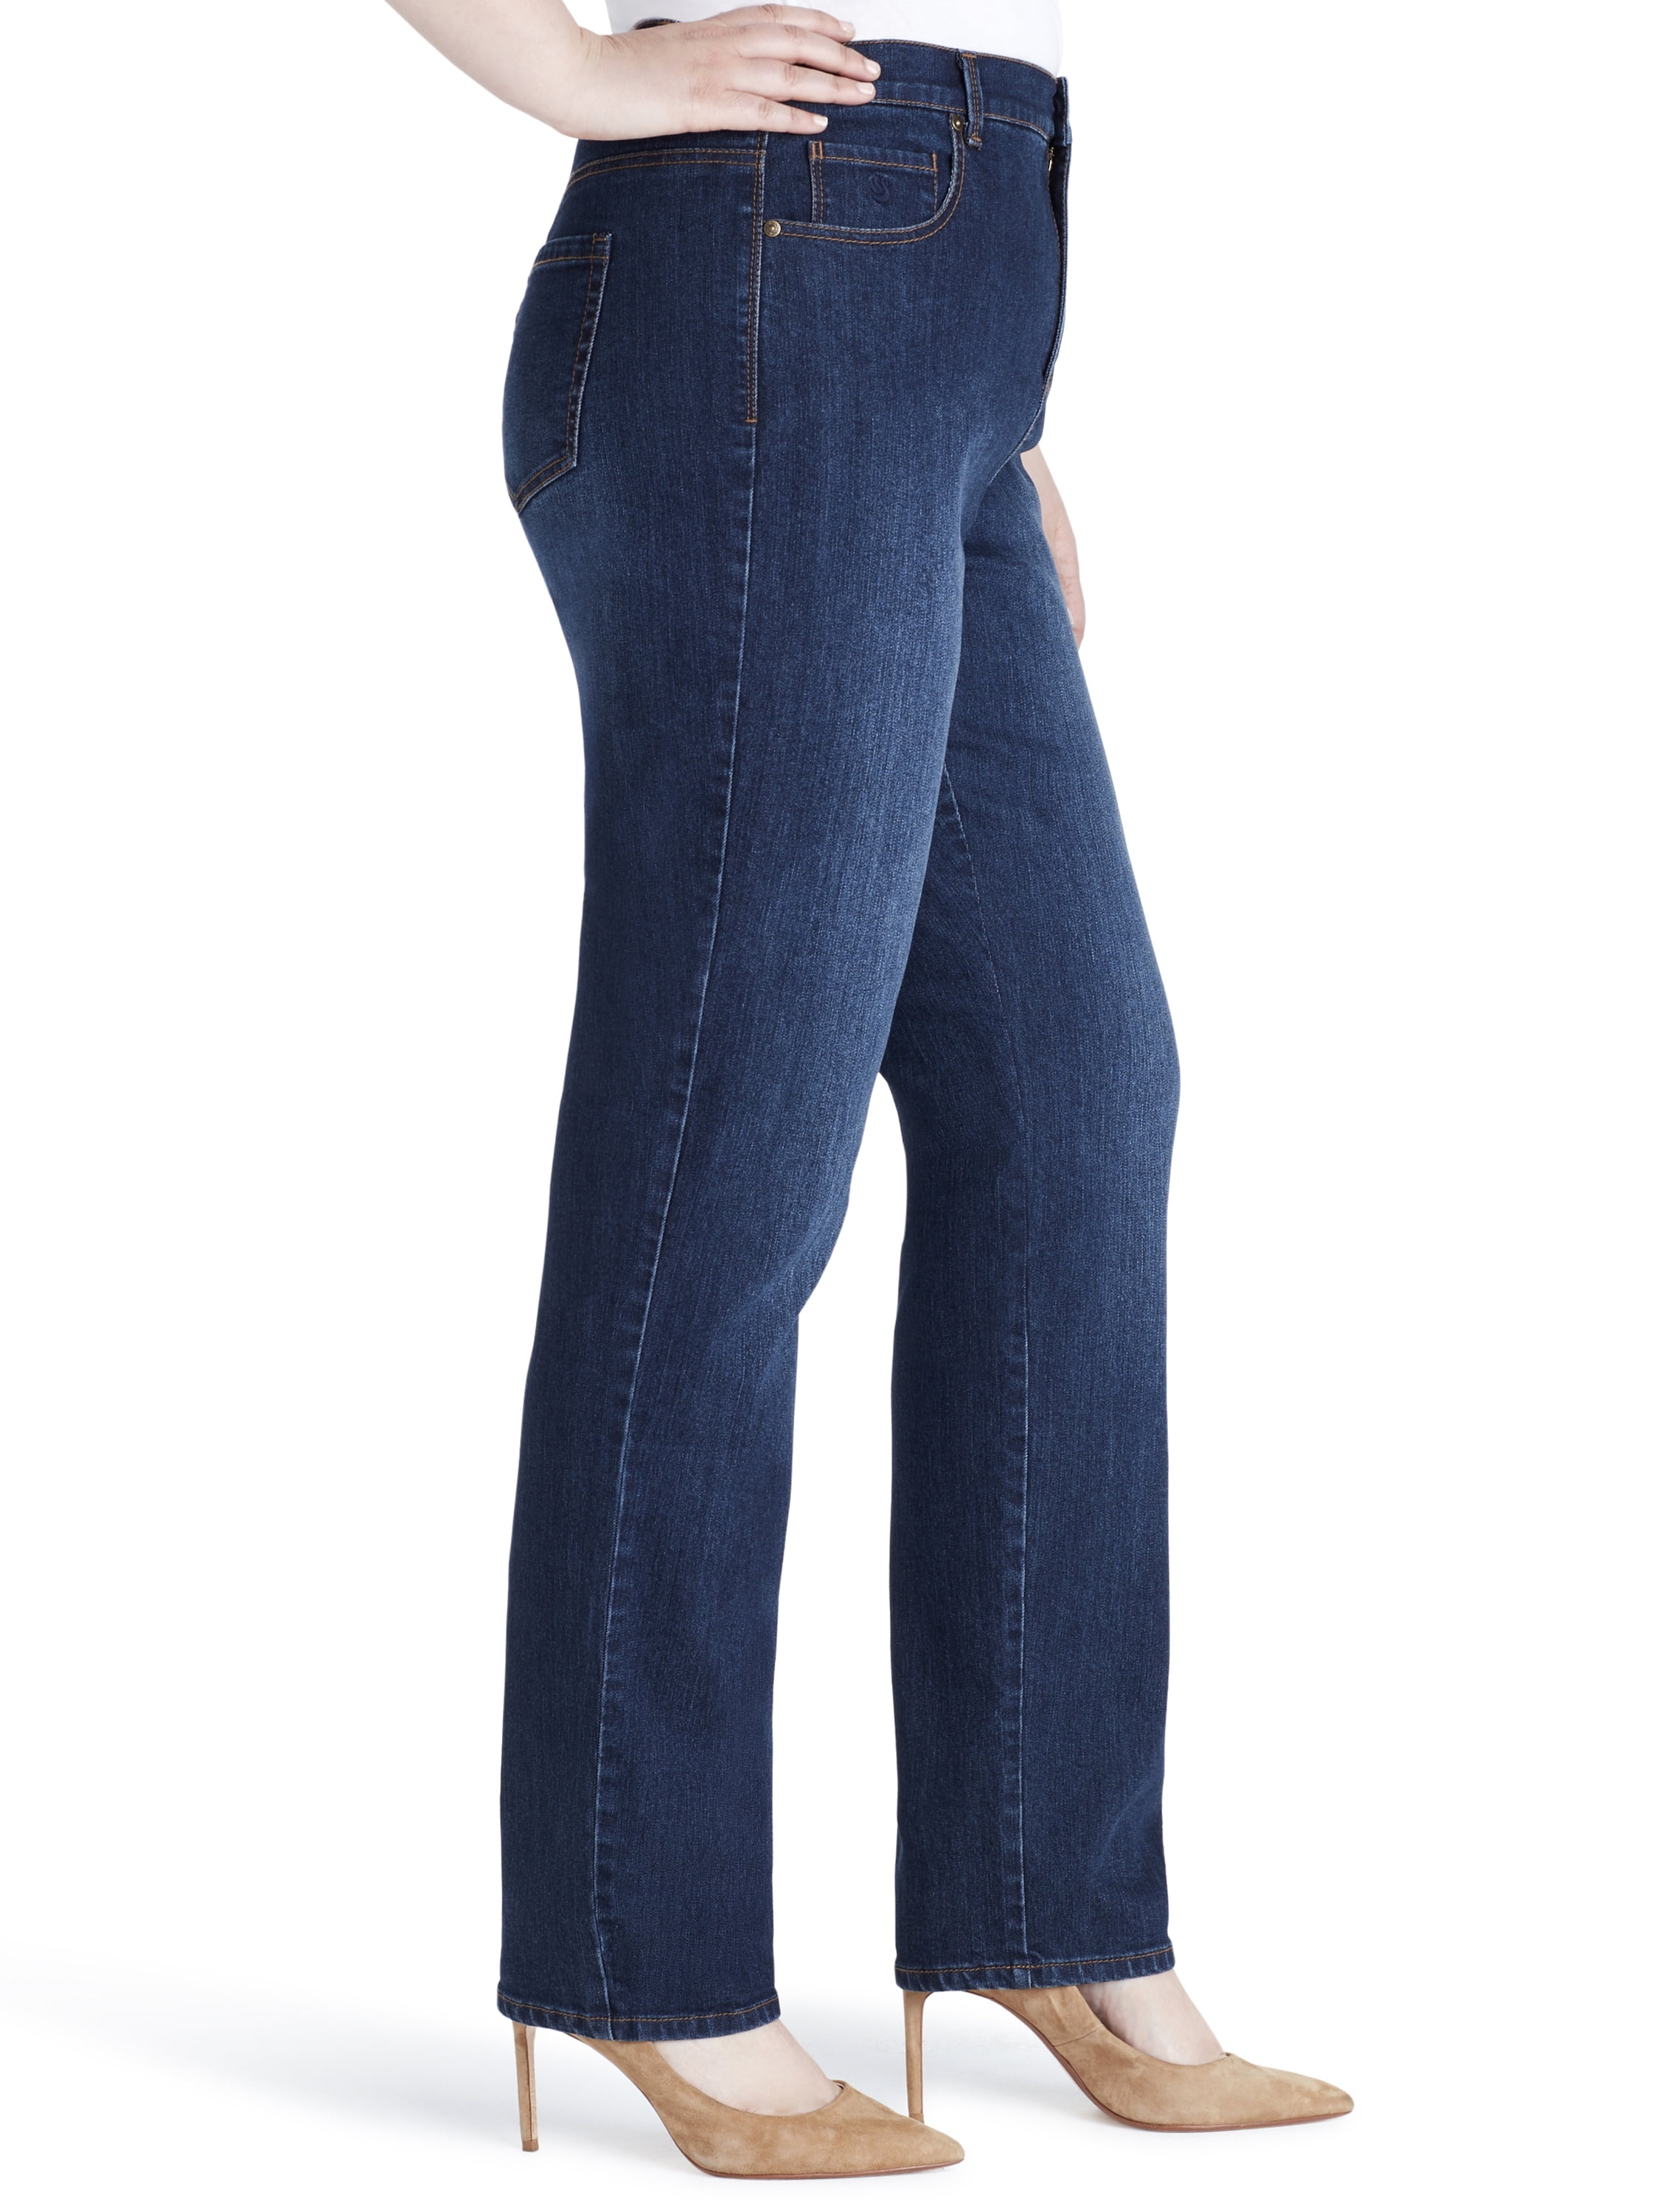 gloria vanderbilt jeans amanda 2.0